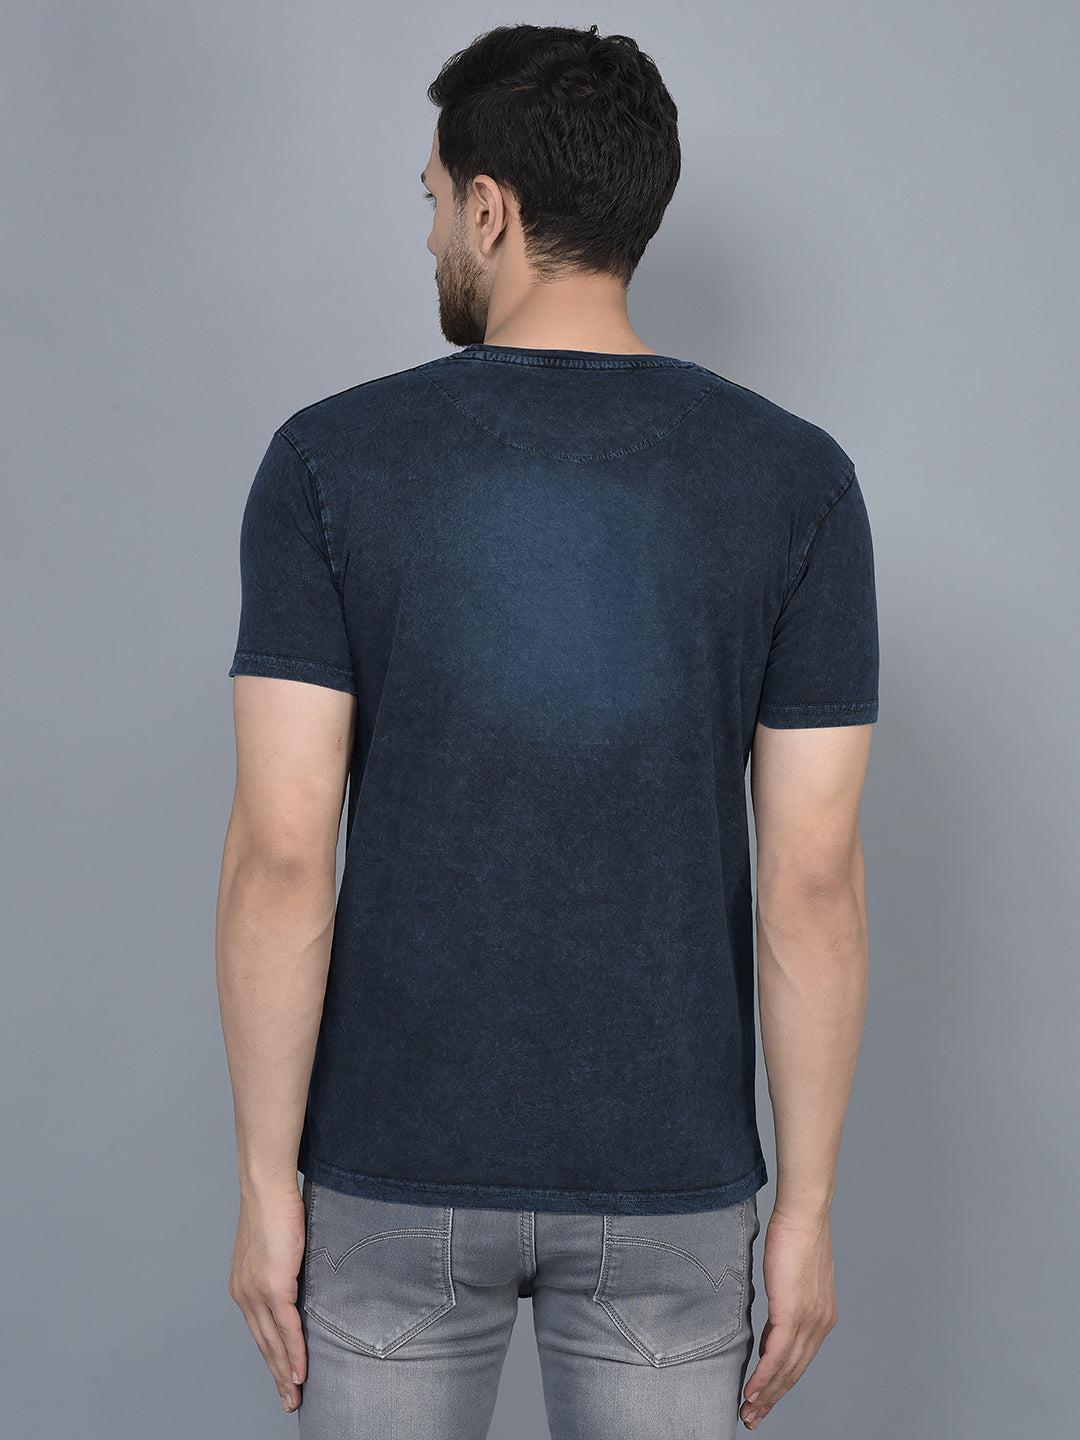 Cobb Navy Blue Printed Round Neck T-Shirt